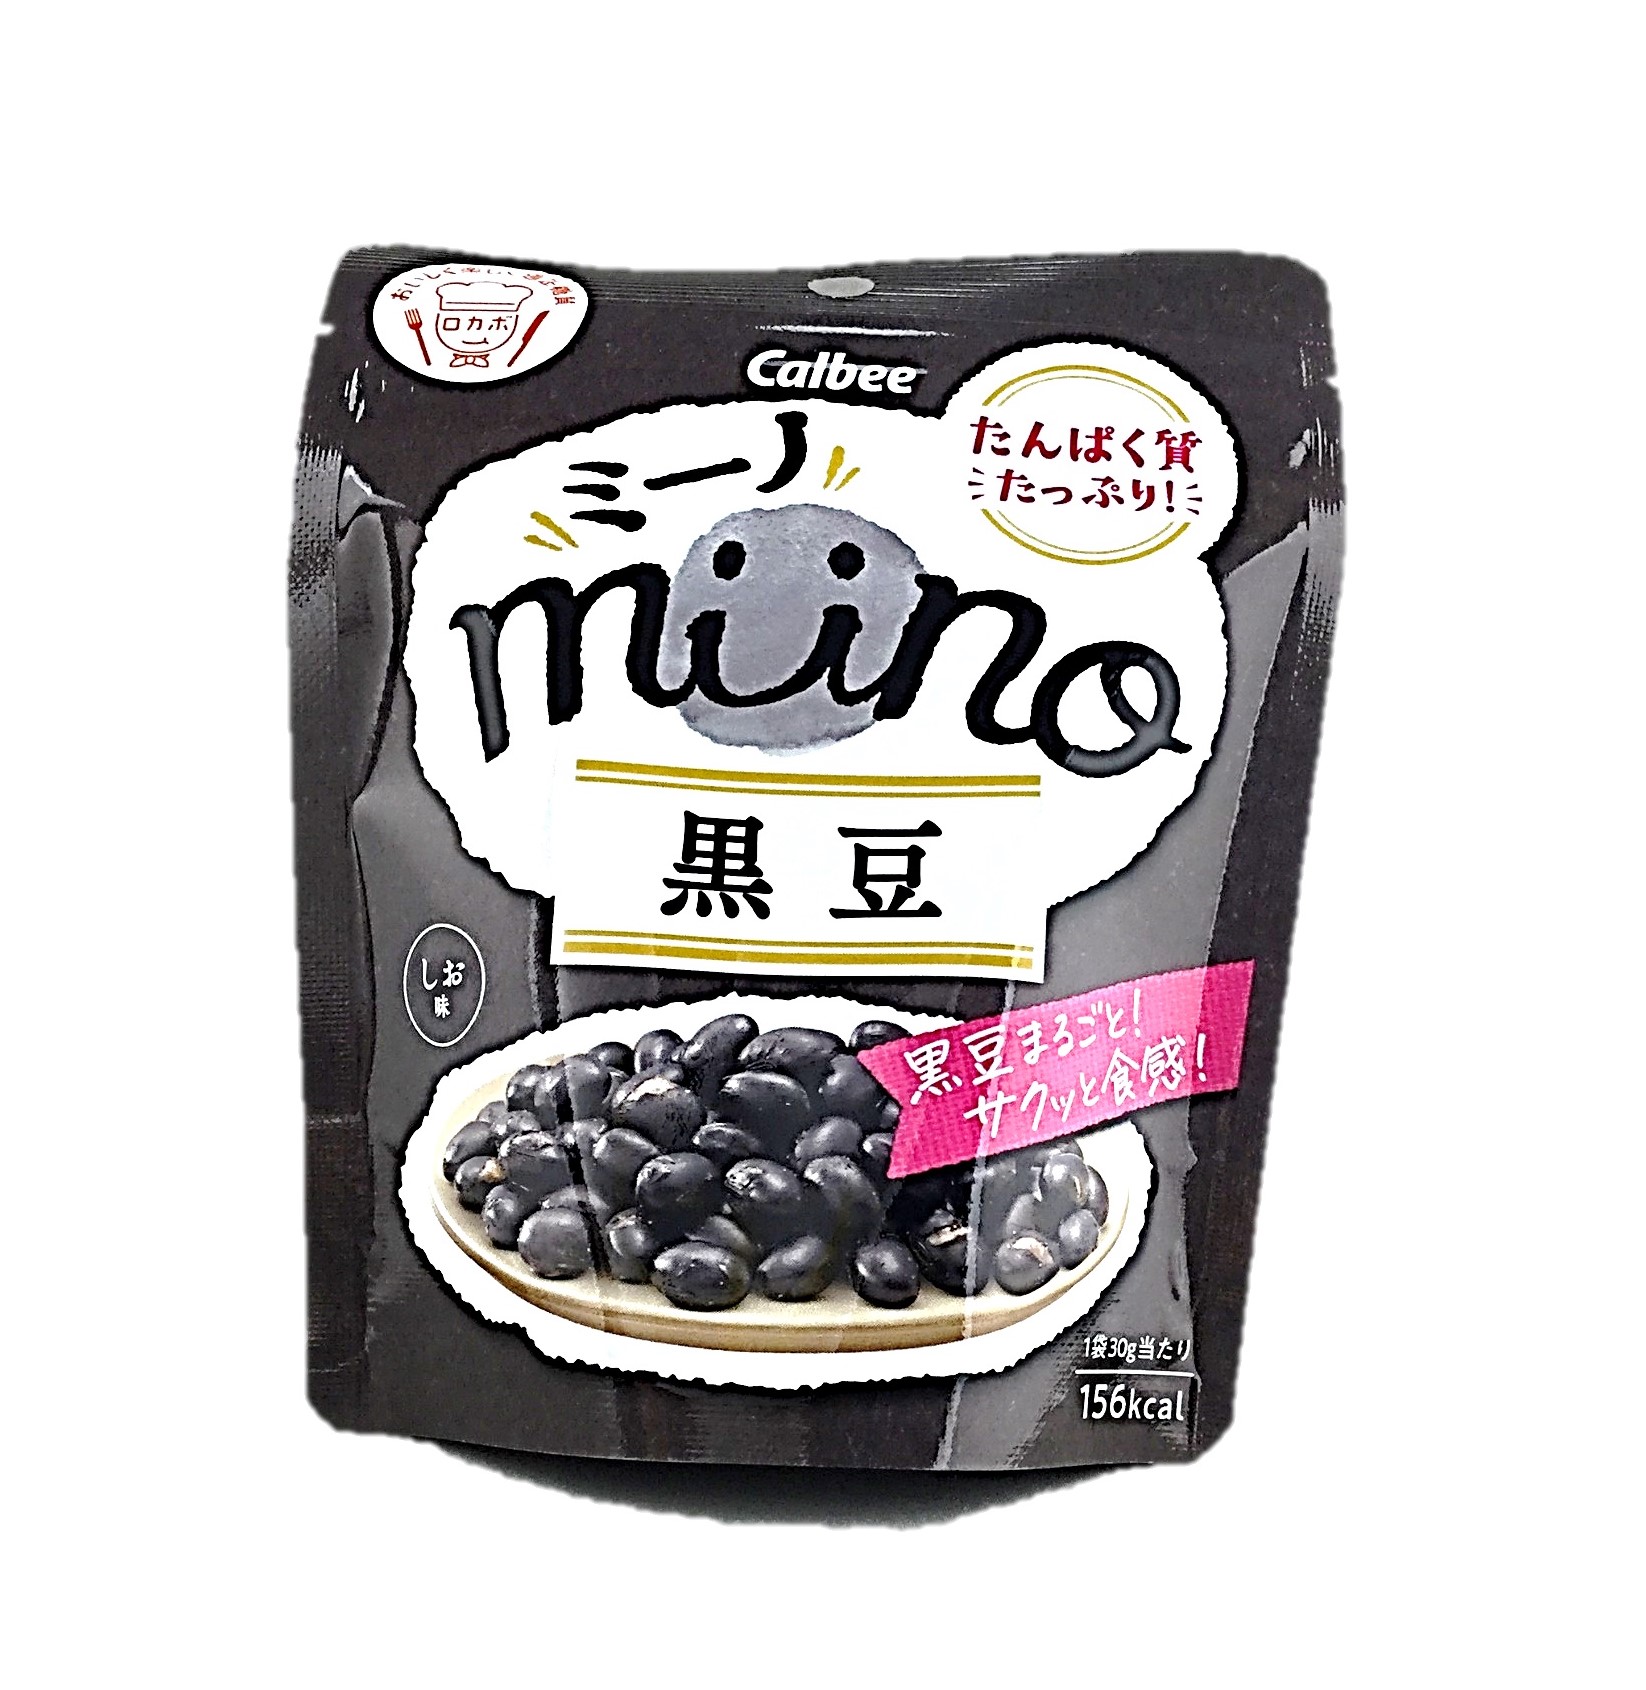 miino黒豆しお味30g カルビー